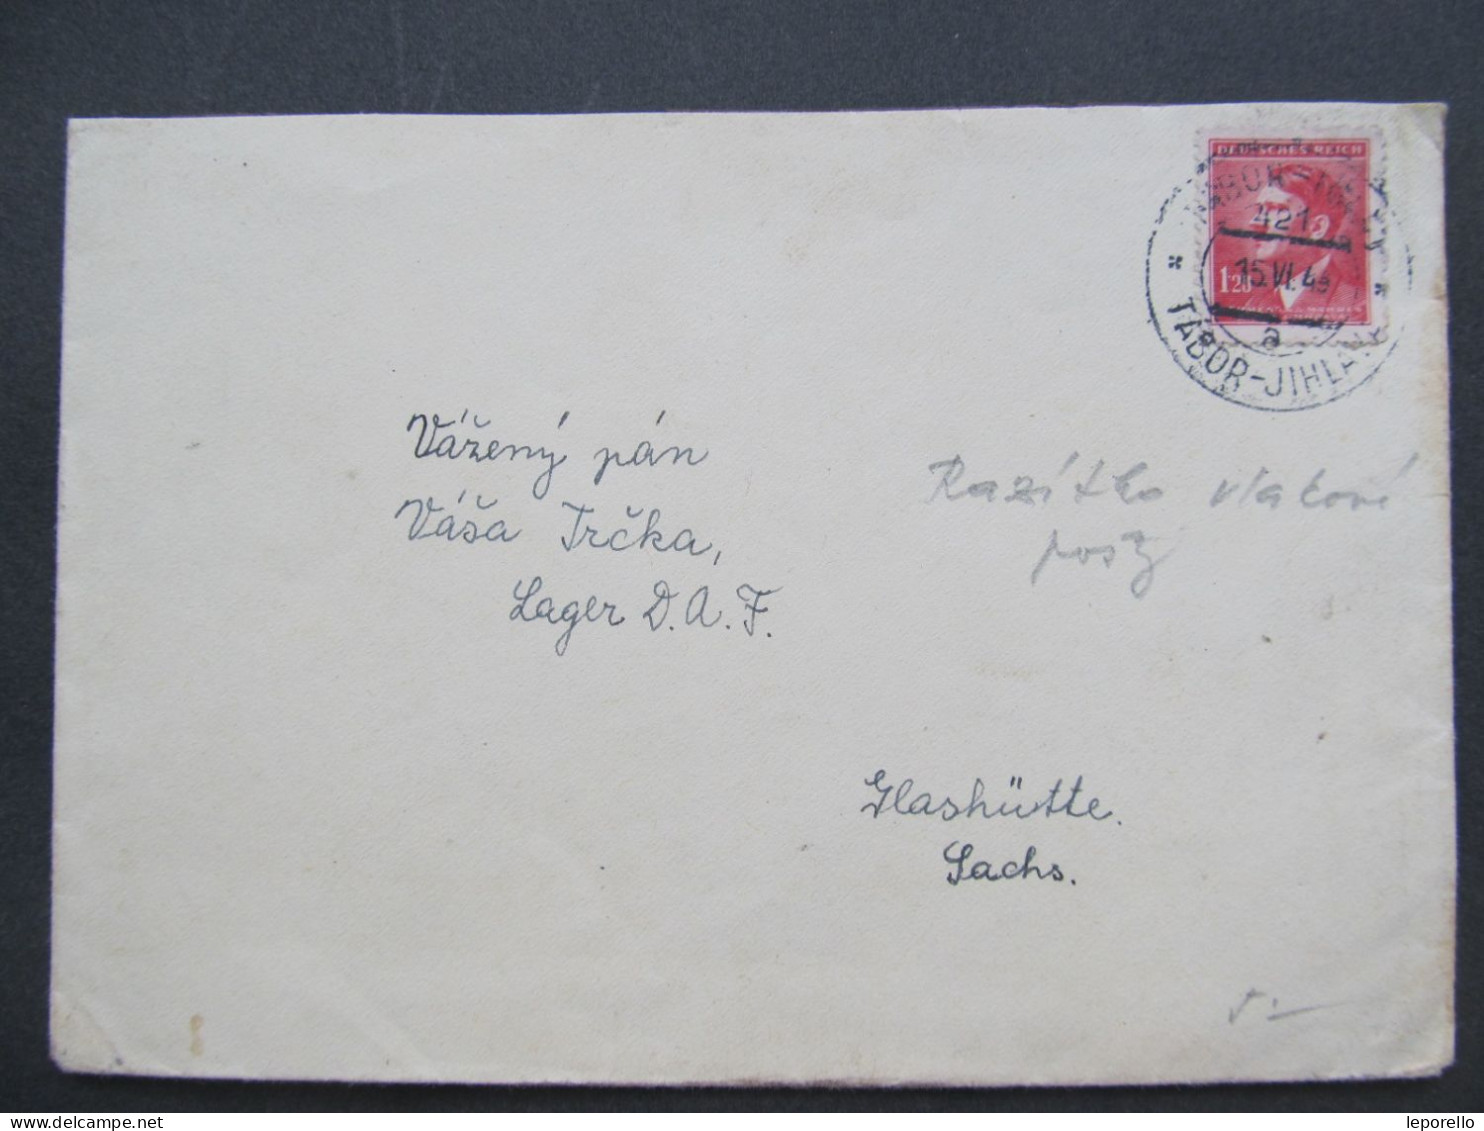 BRIEF Tábor - Jihlava 1943 Bahnpost   / P7194 - Lettres & Documents